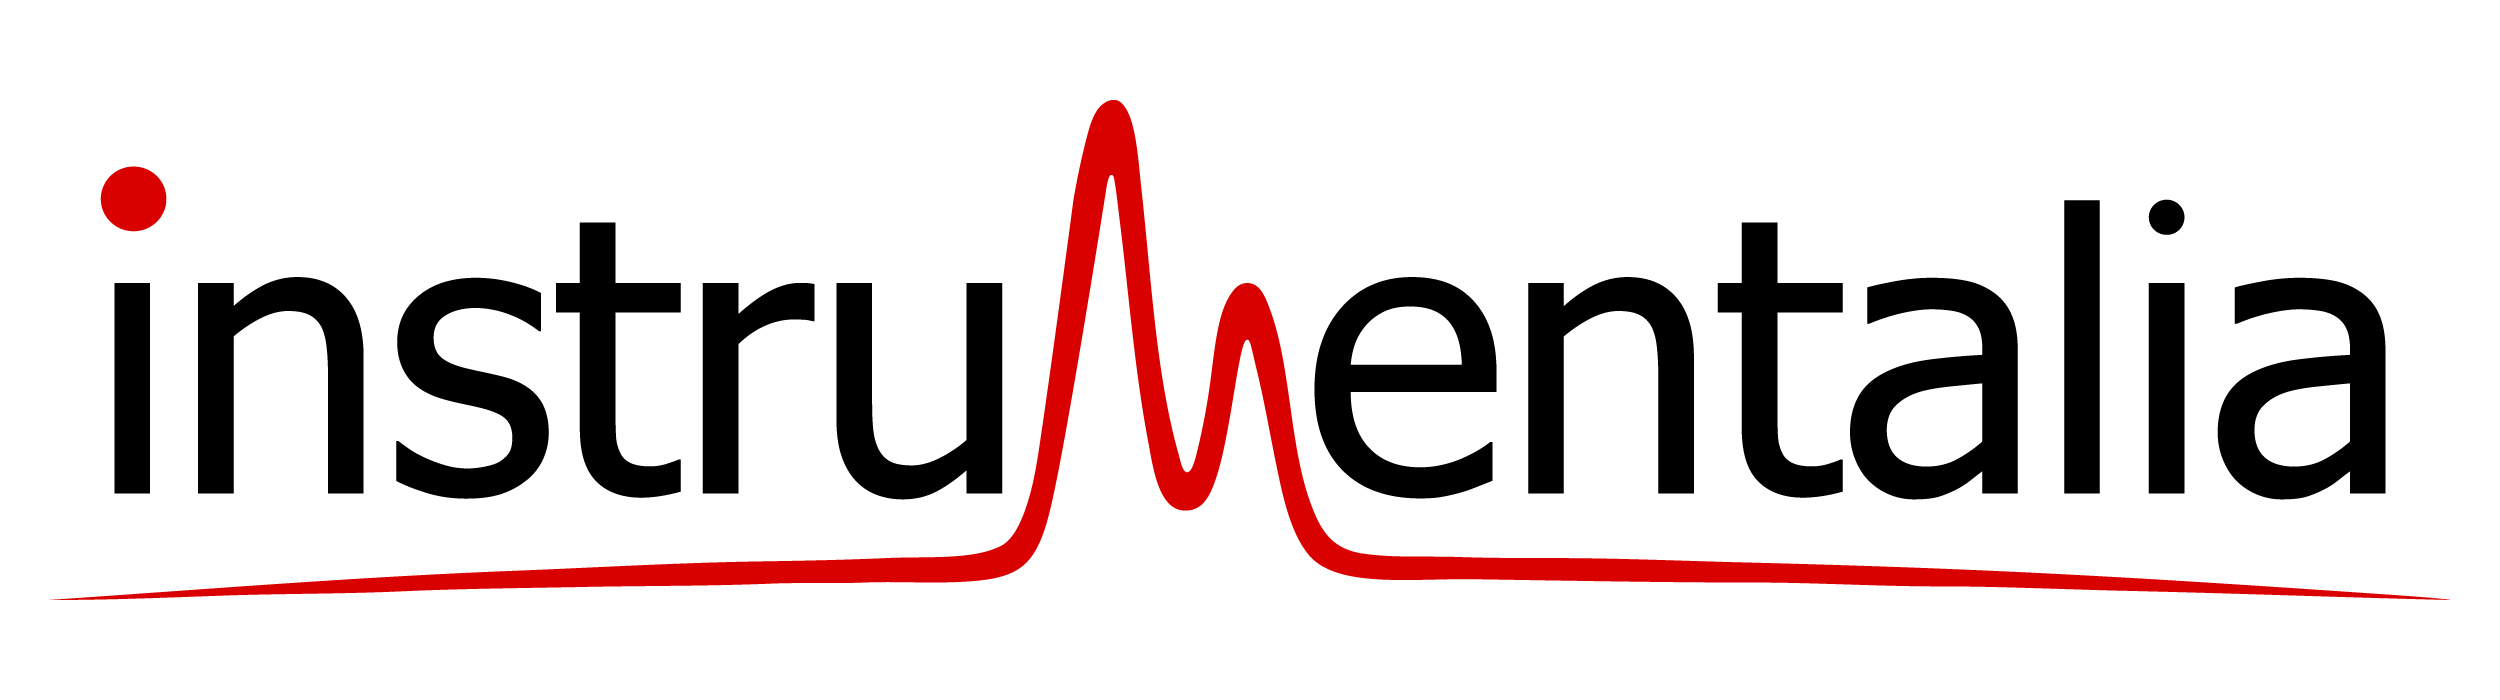 Instrumentalia logo